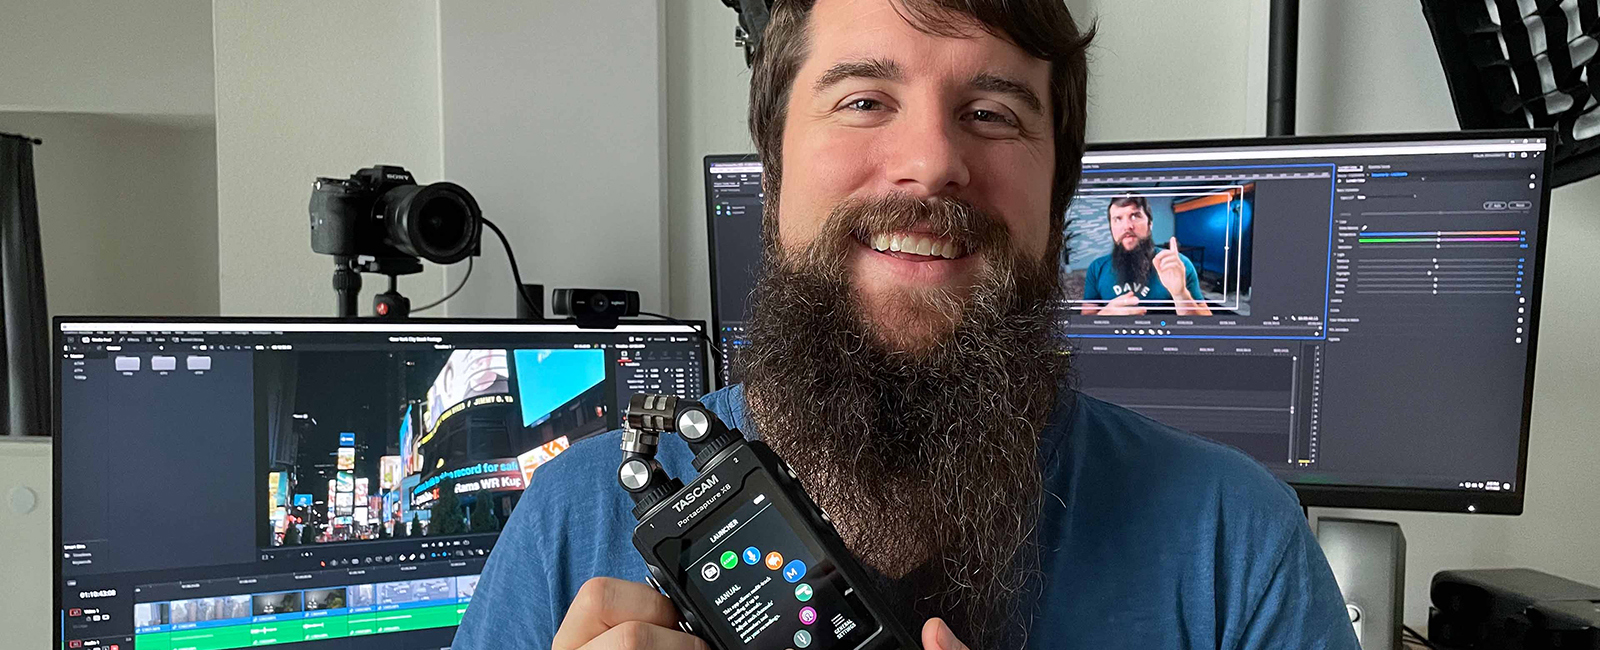 La grabadora de mano multipista Portacapture X8 brinda oportunidades creativas al Matt Johnson